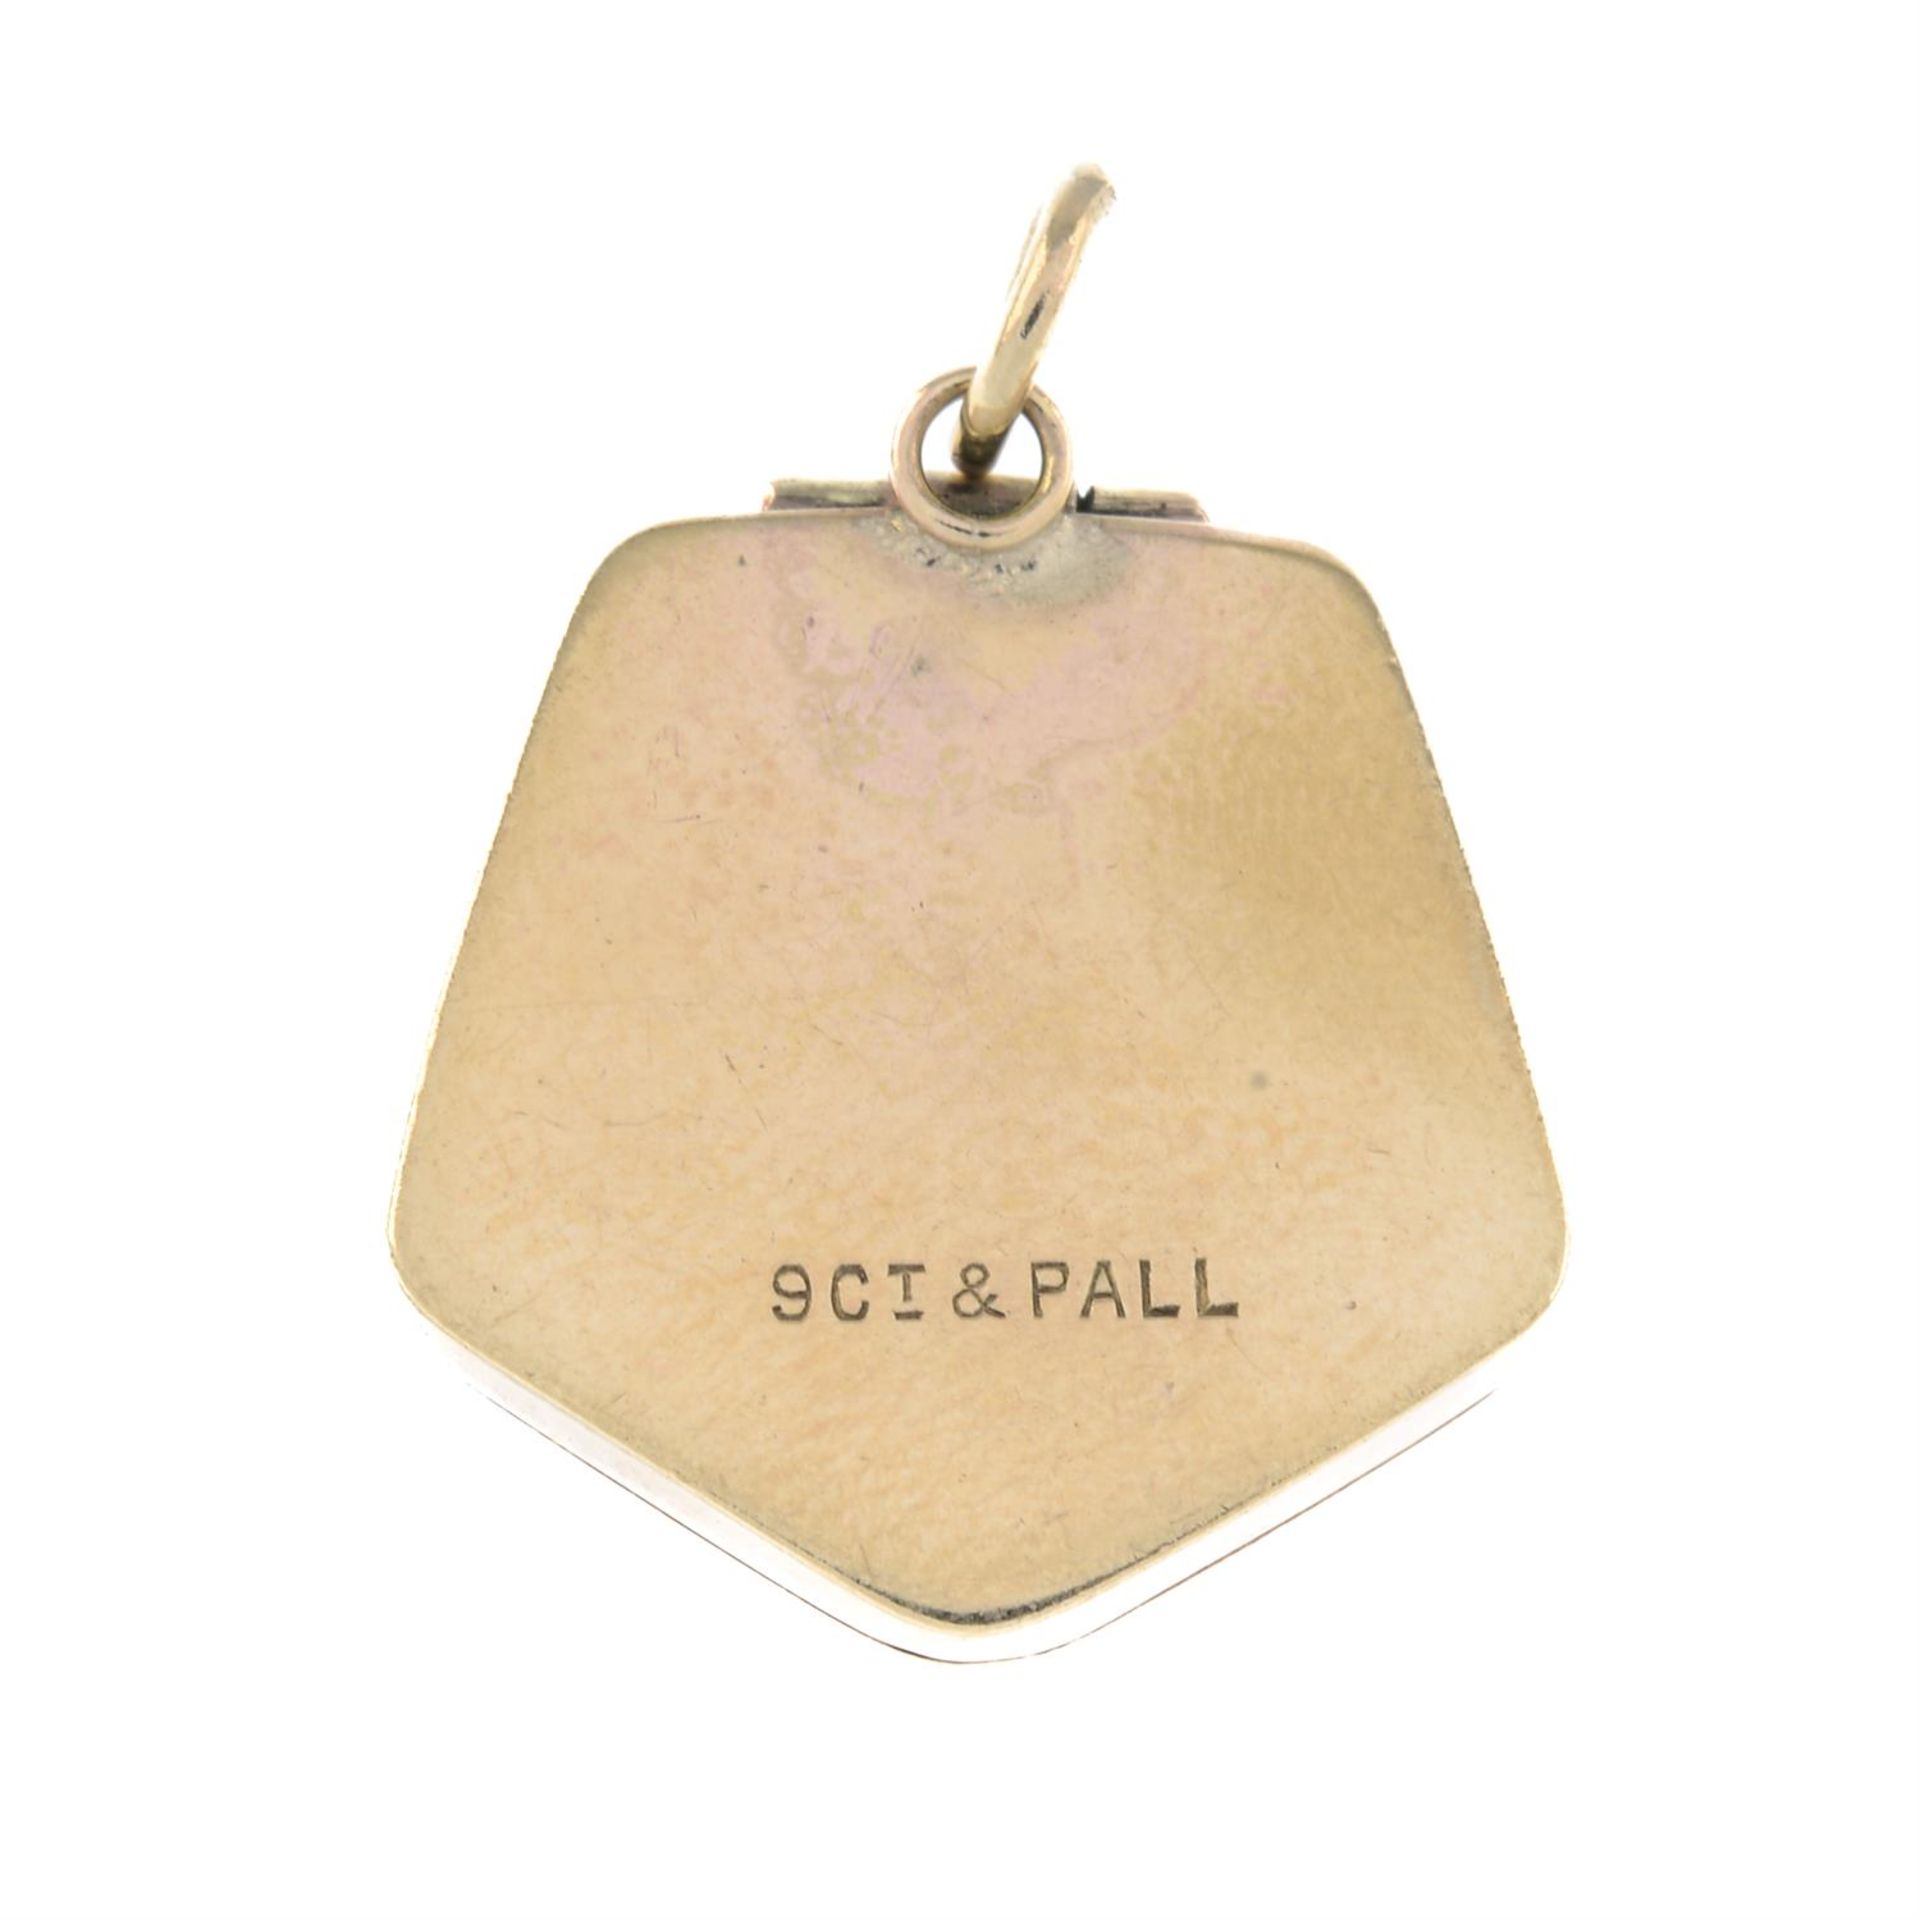 Early 20th century locket pendant - Image 3 of 3